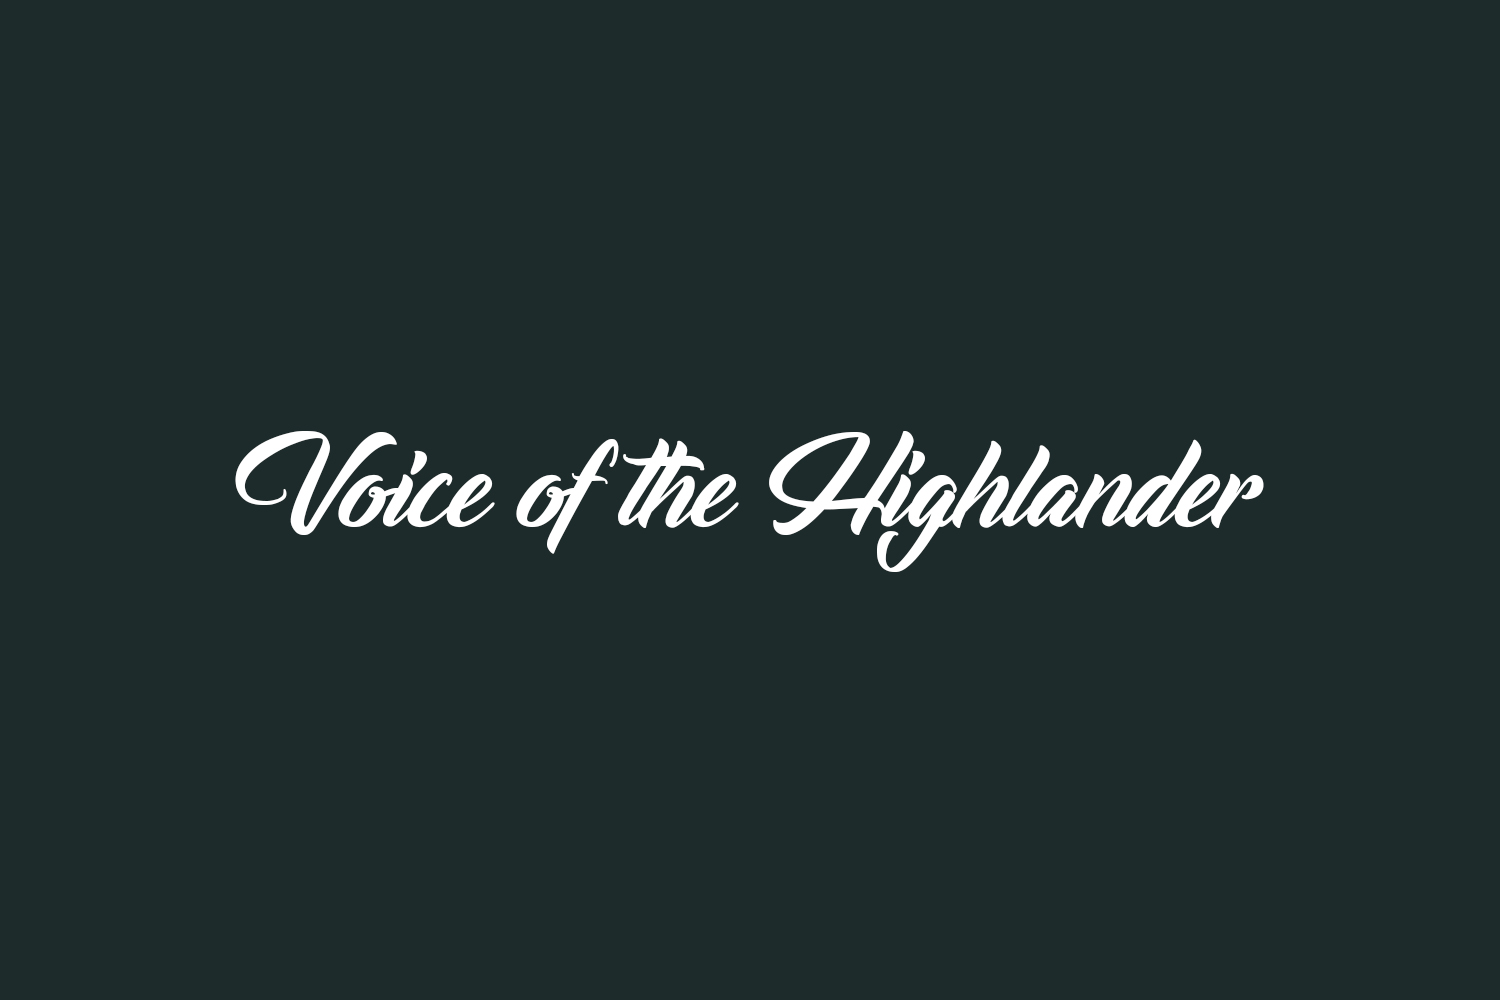 Voice of the Highlander